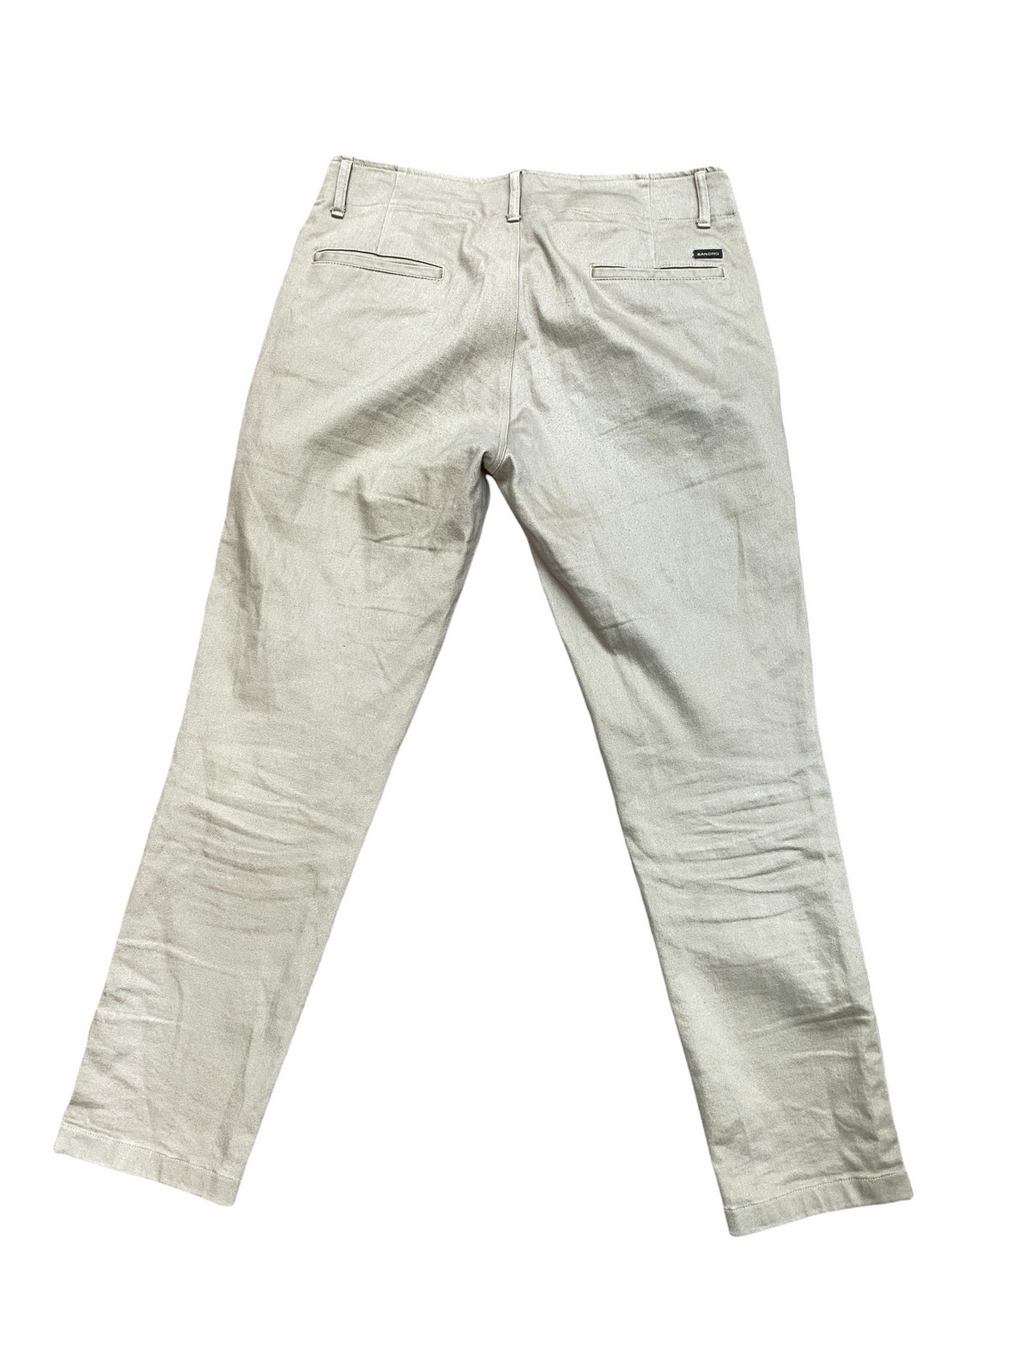 Beige Cotton Chino Pants  Size US 34